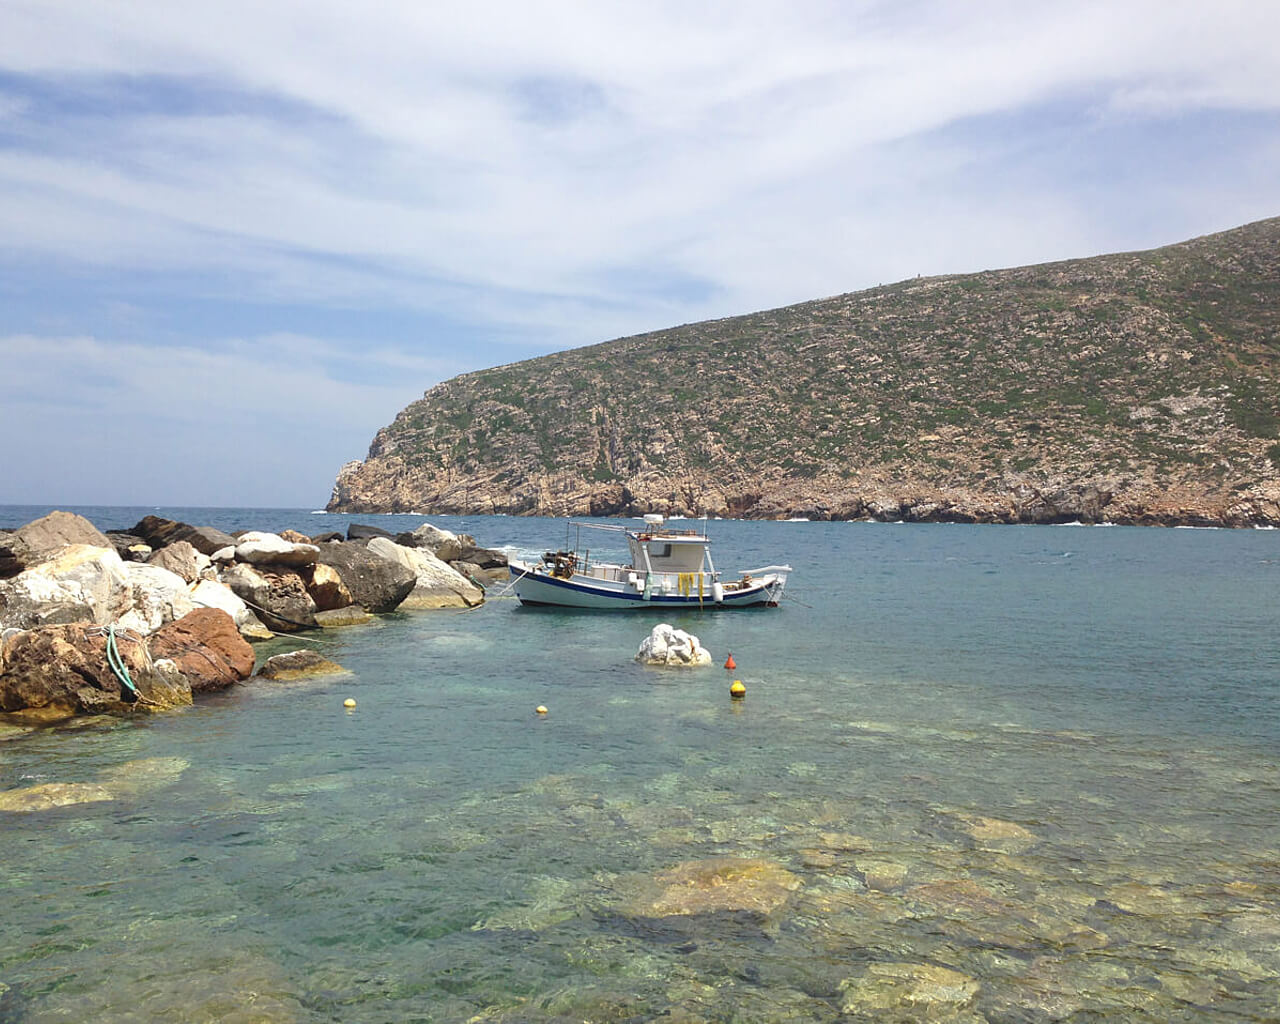 Voyages aux Cyclades, Naxos, Grèce